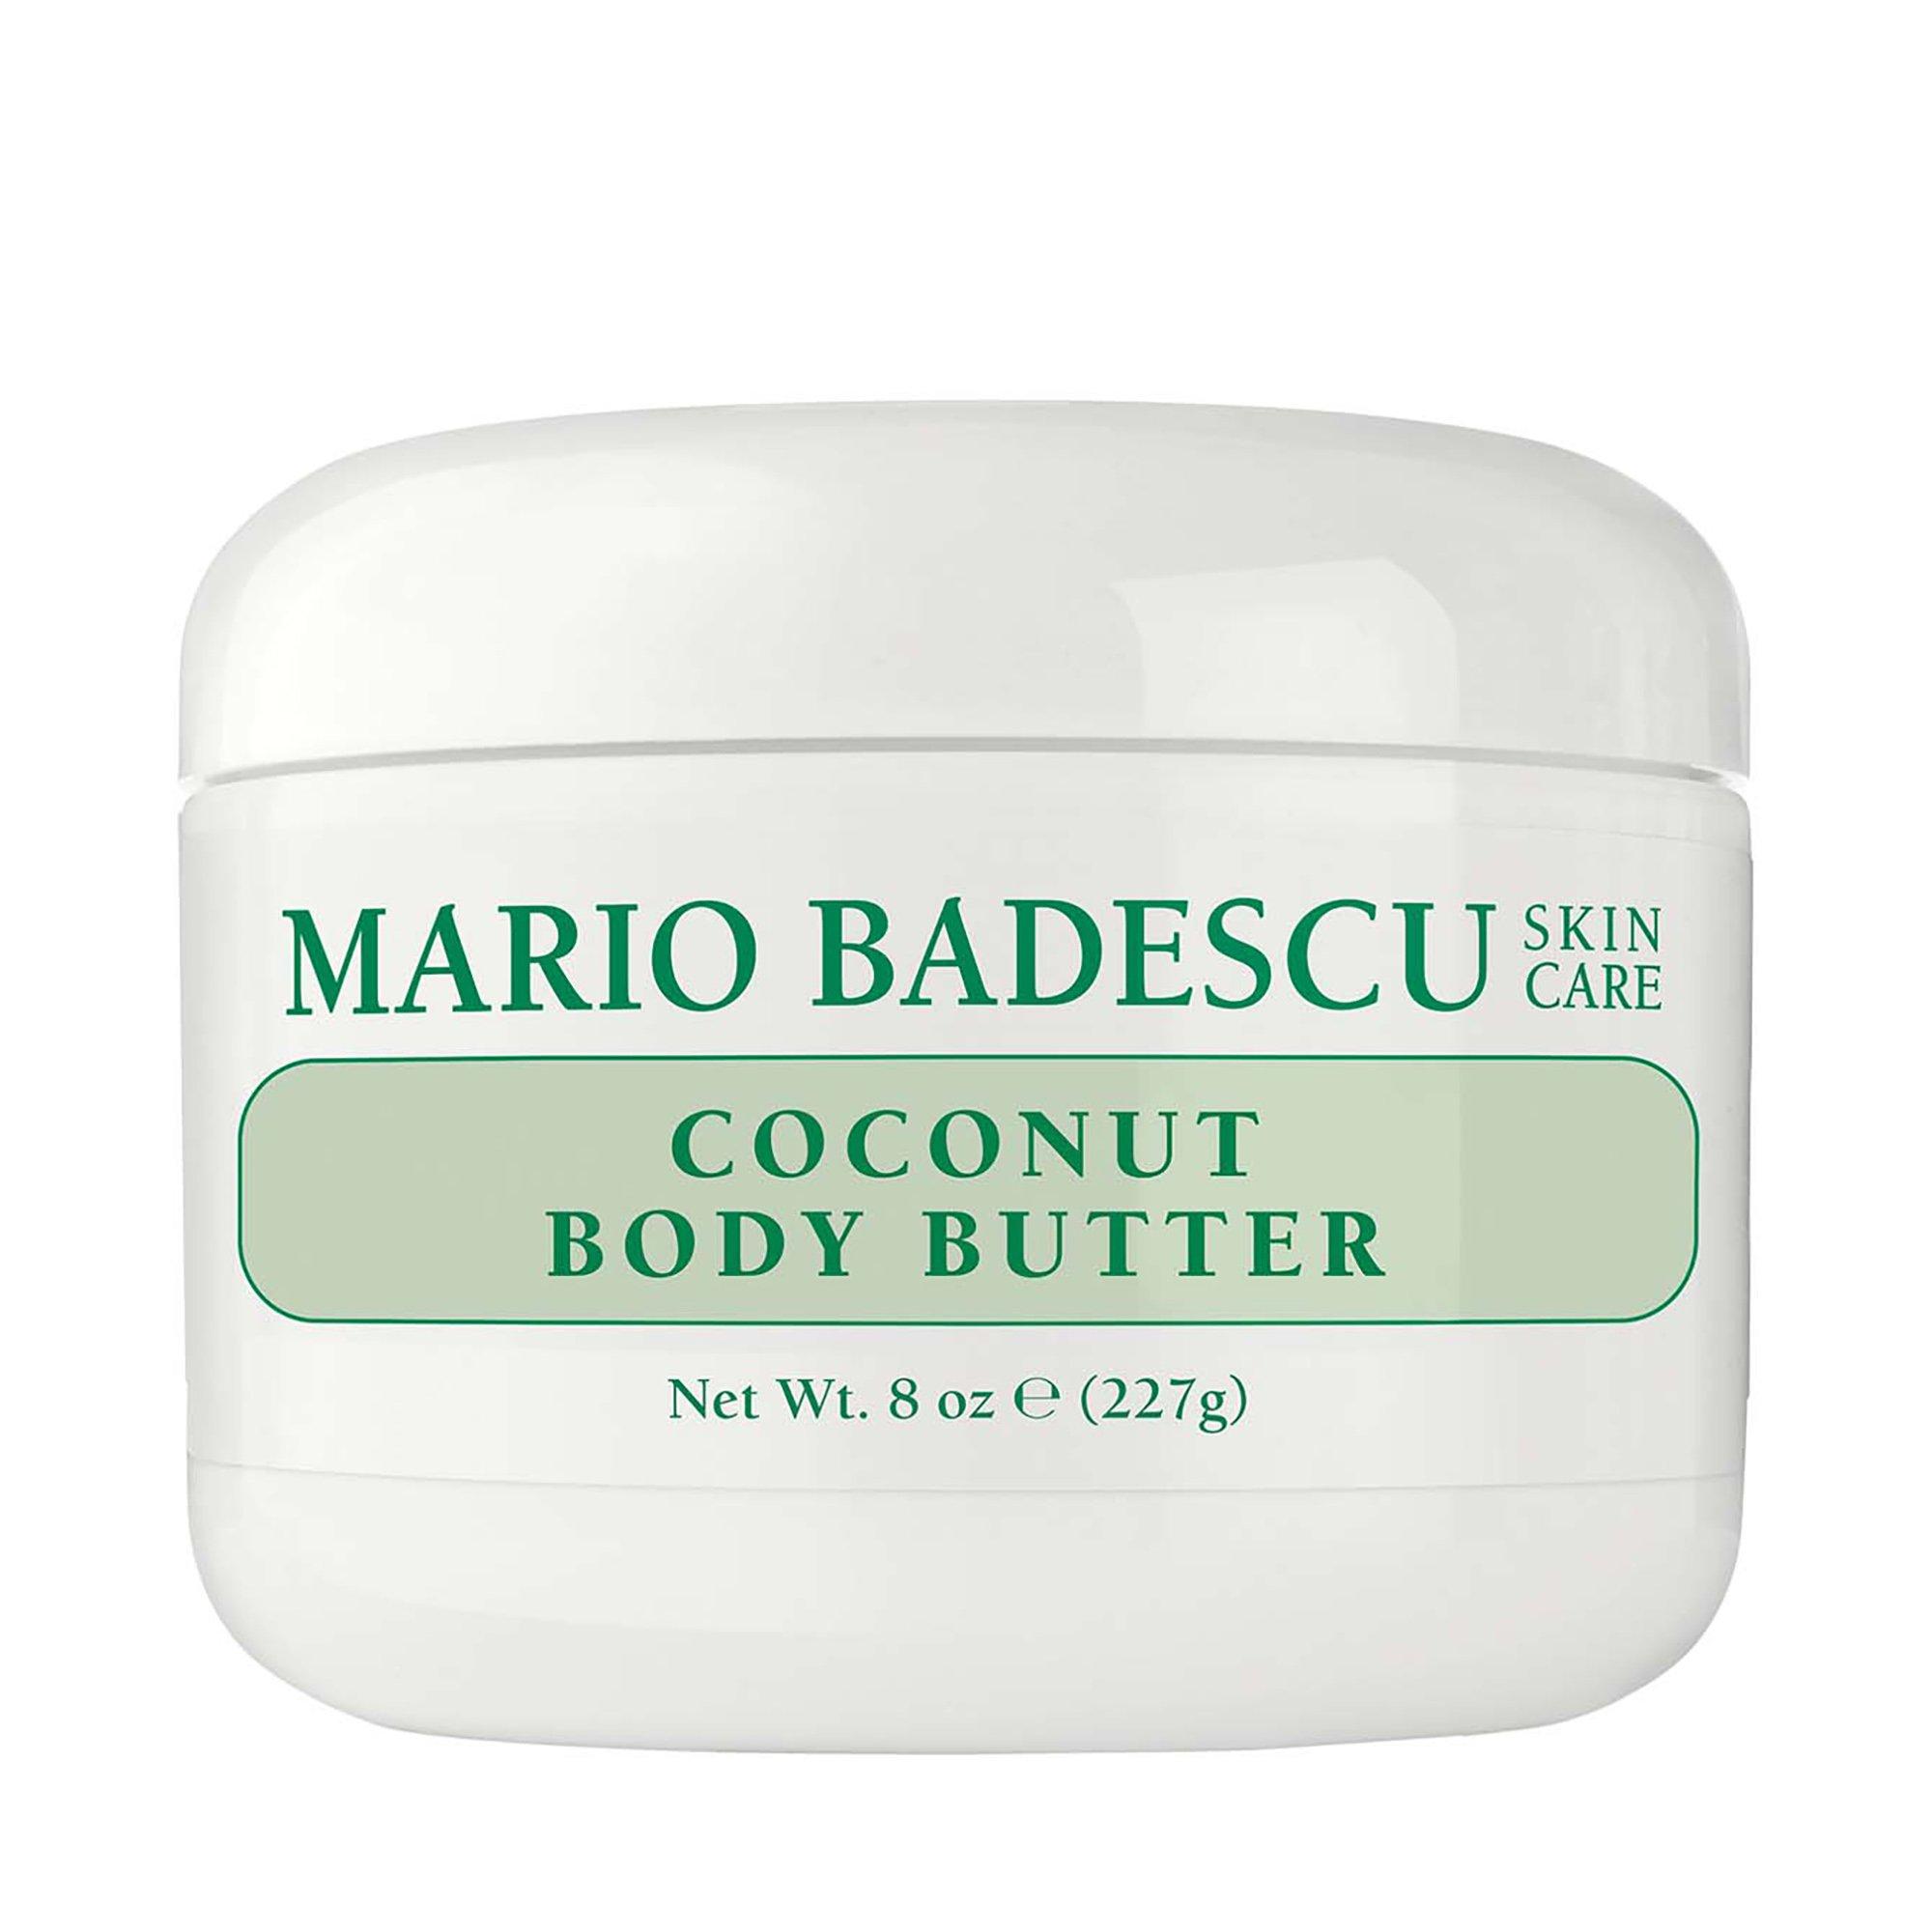 Image of MARIO BADESCU Acne Coconut Body Butter - 227g